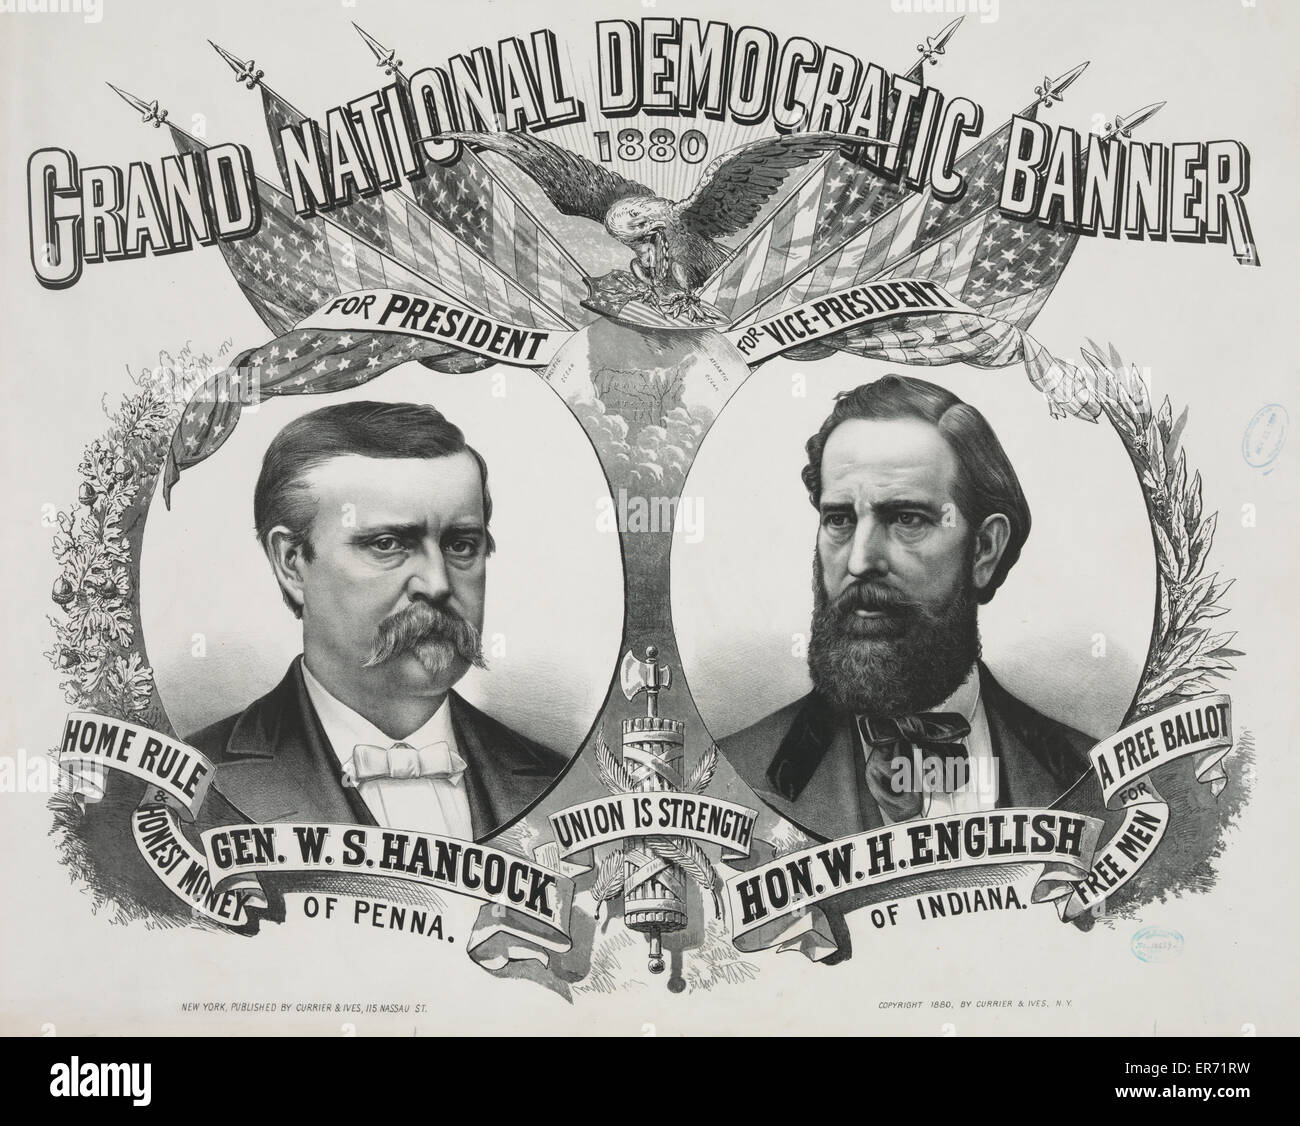 Grand National Democratic banner: 1880 Foto Stock